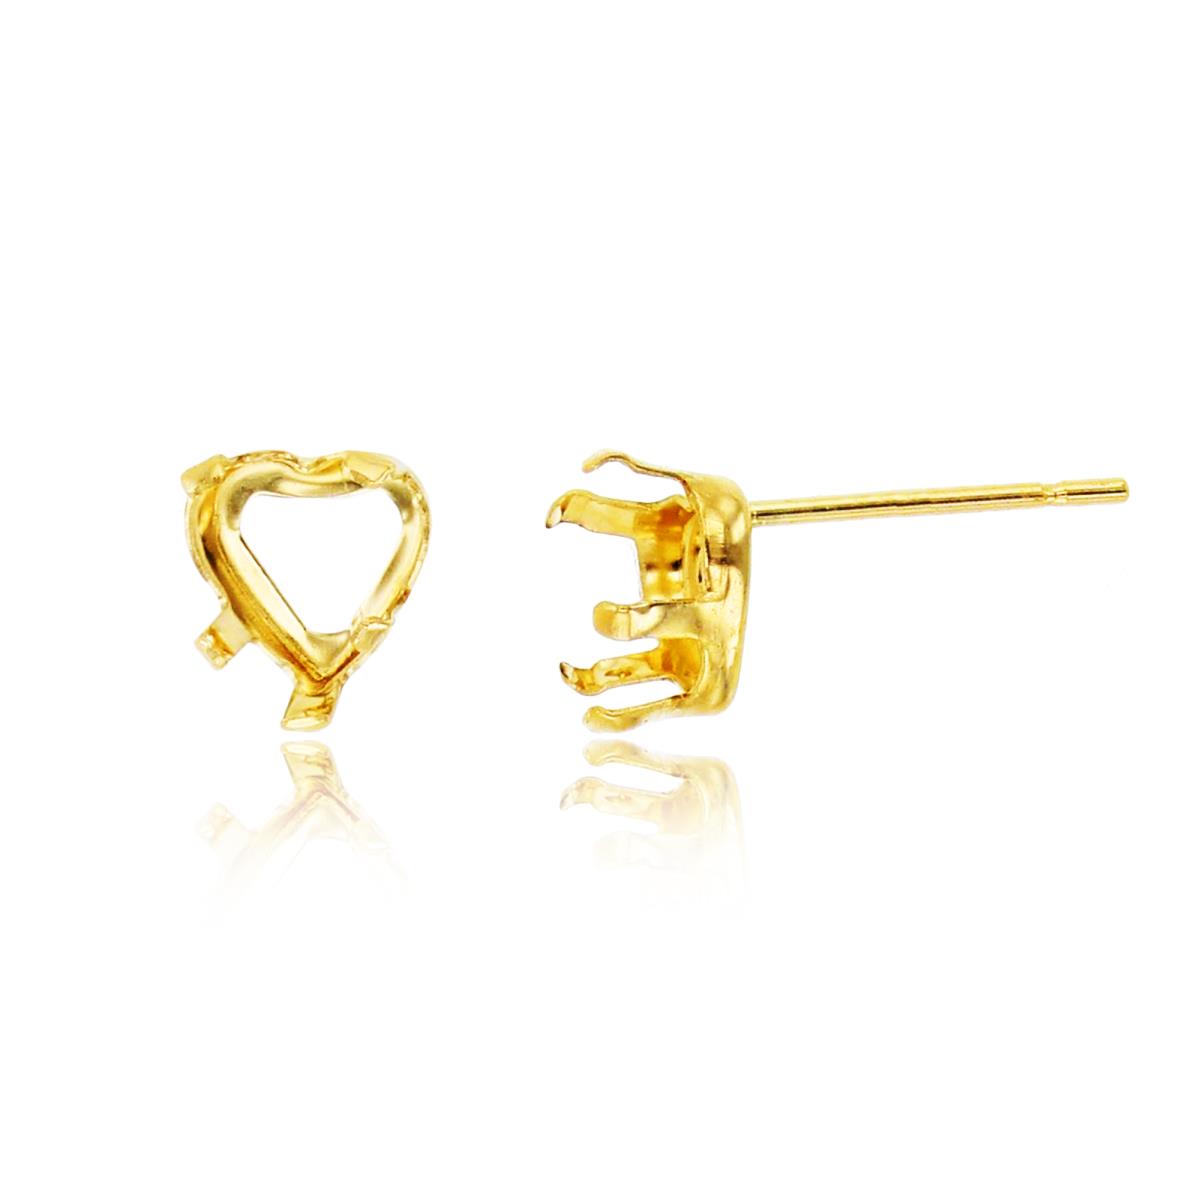 10K Yellow Gold 5x5mm Heart Prong Stud Finding (PR)